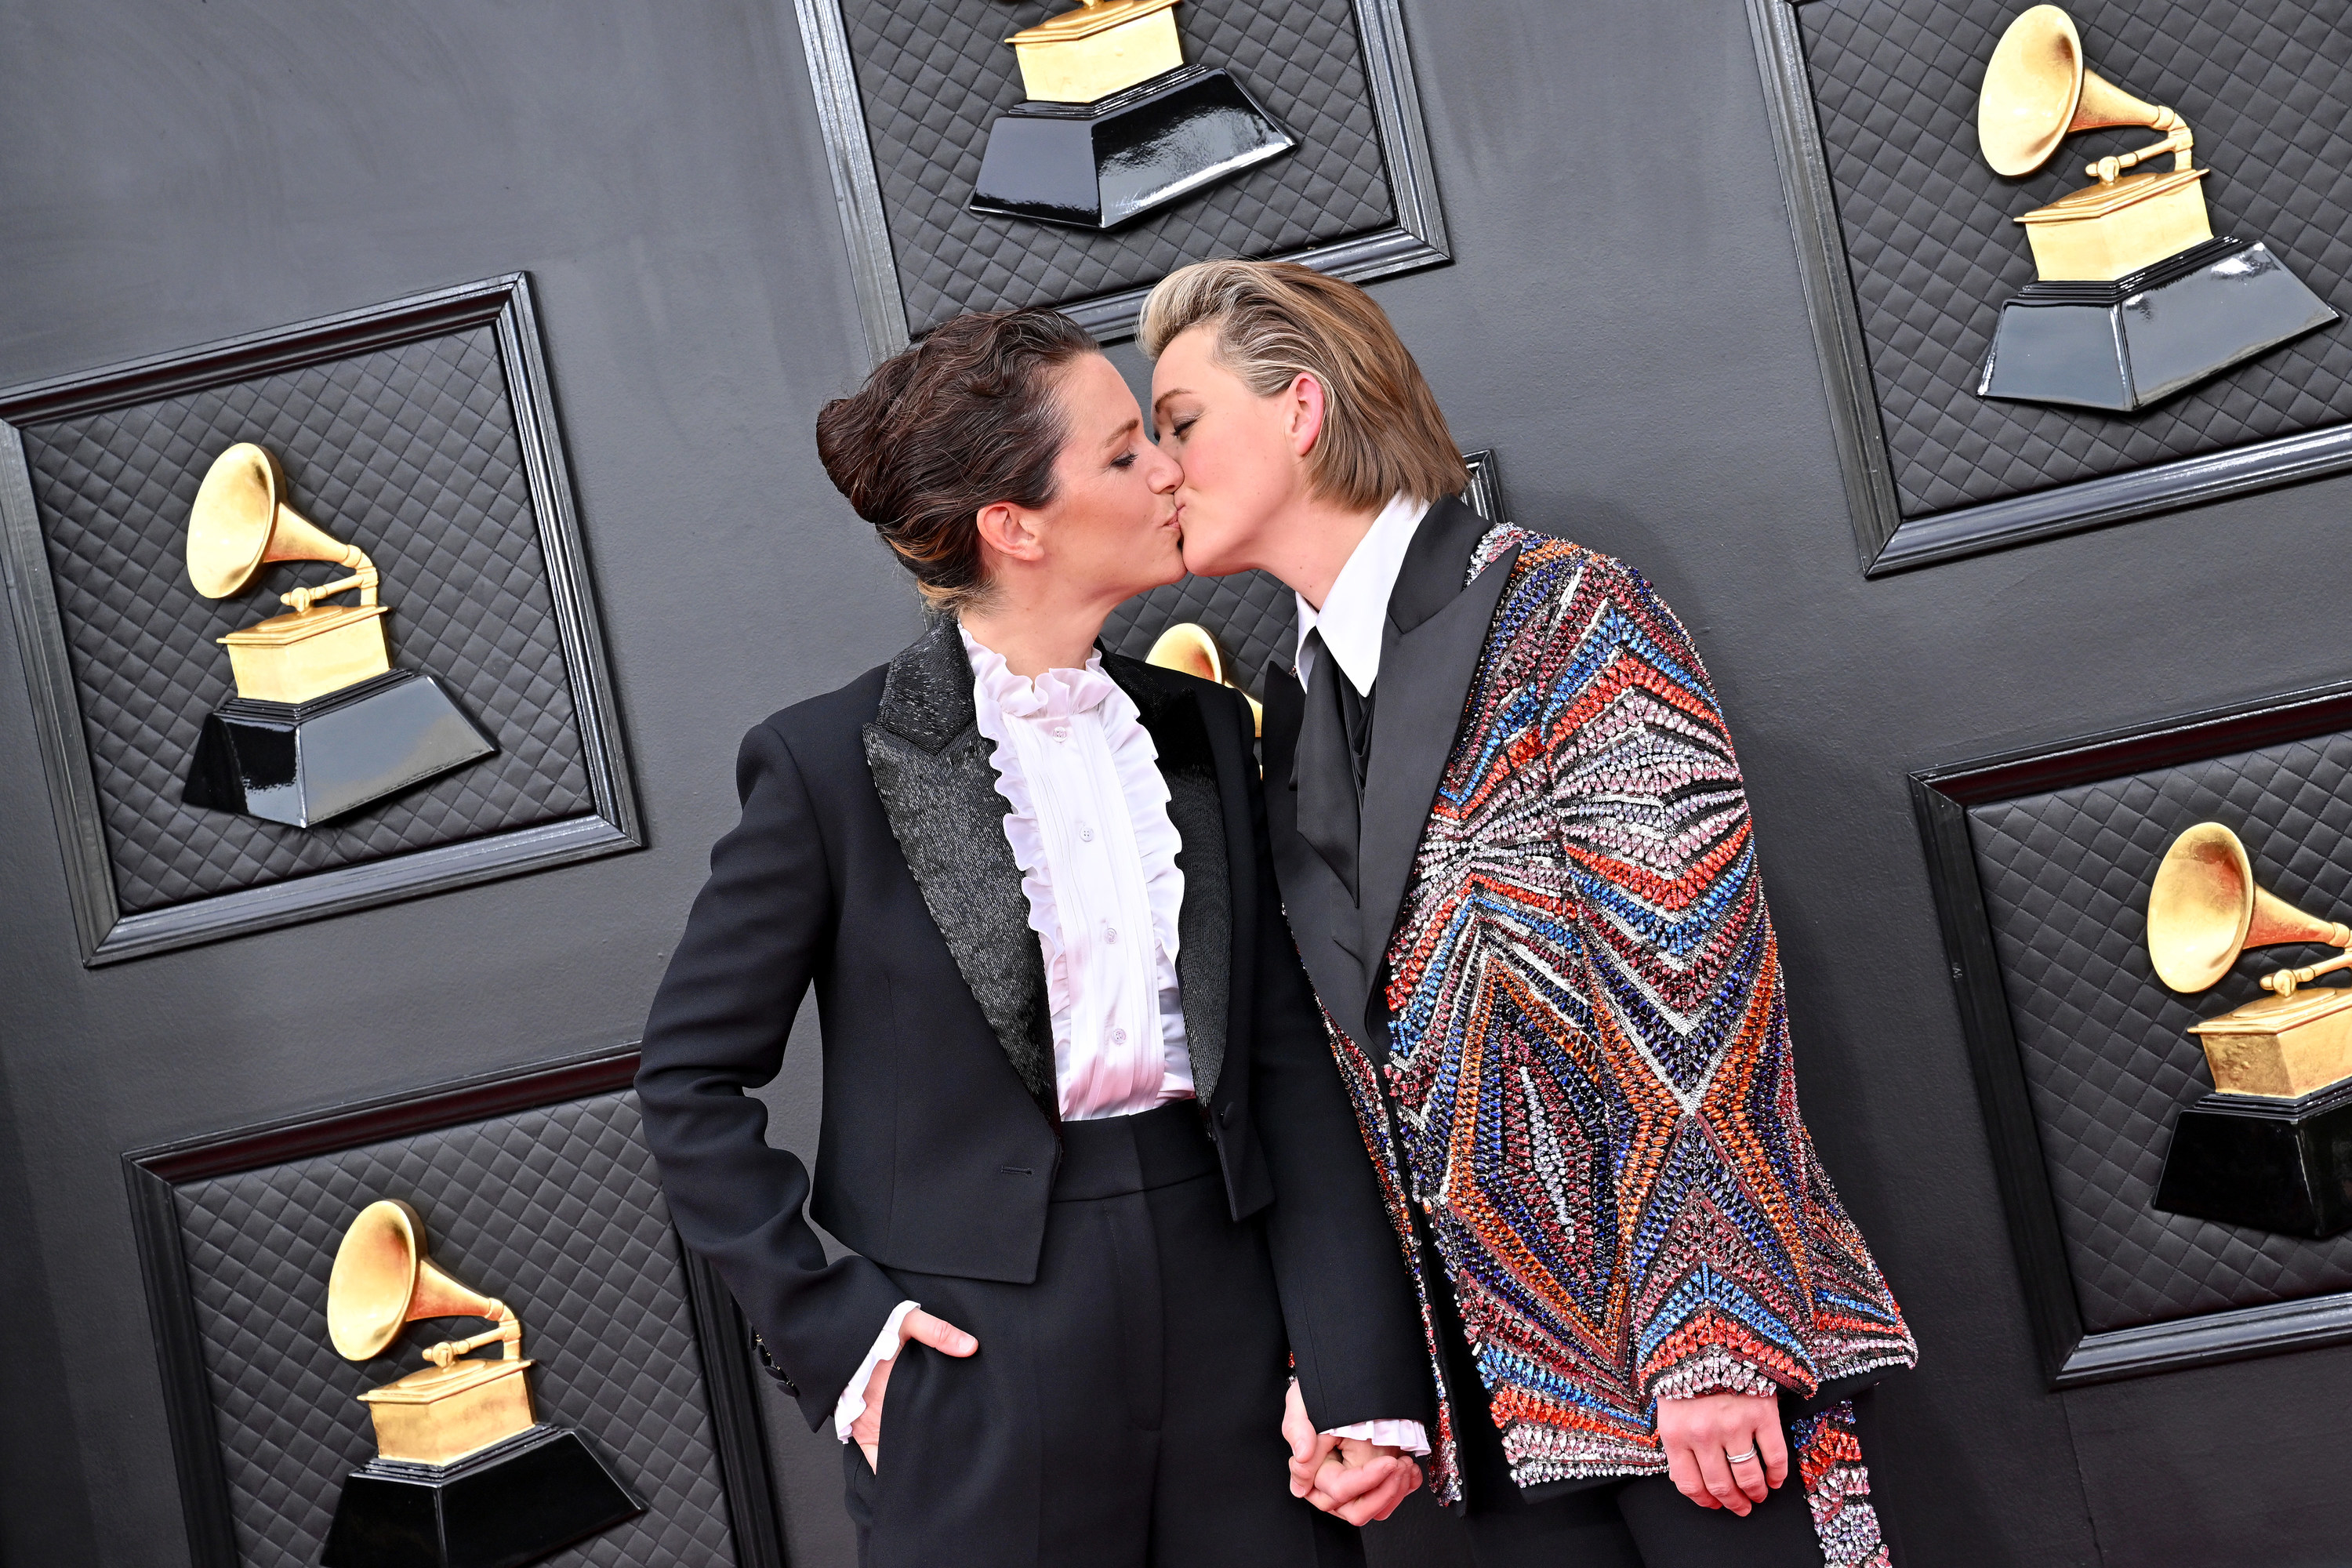 Brandi Carlile and Catherine Shepherd kiss at the Grammys